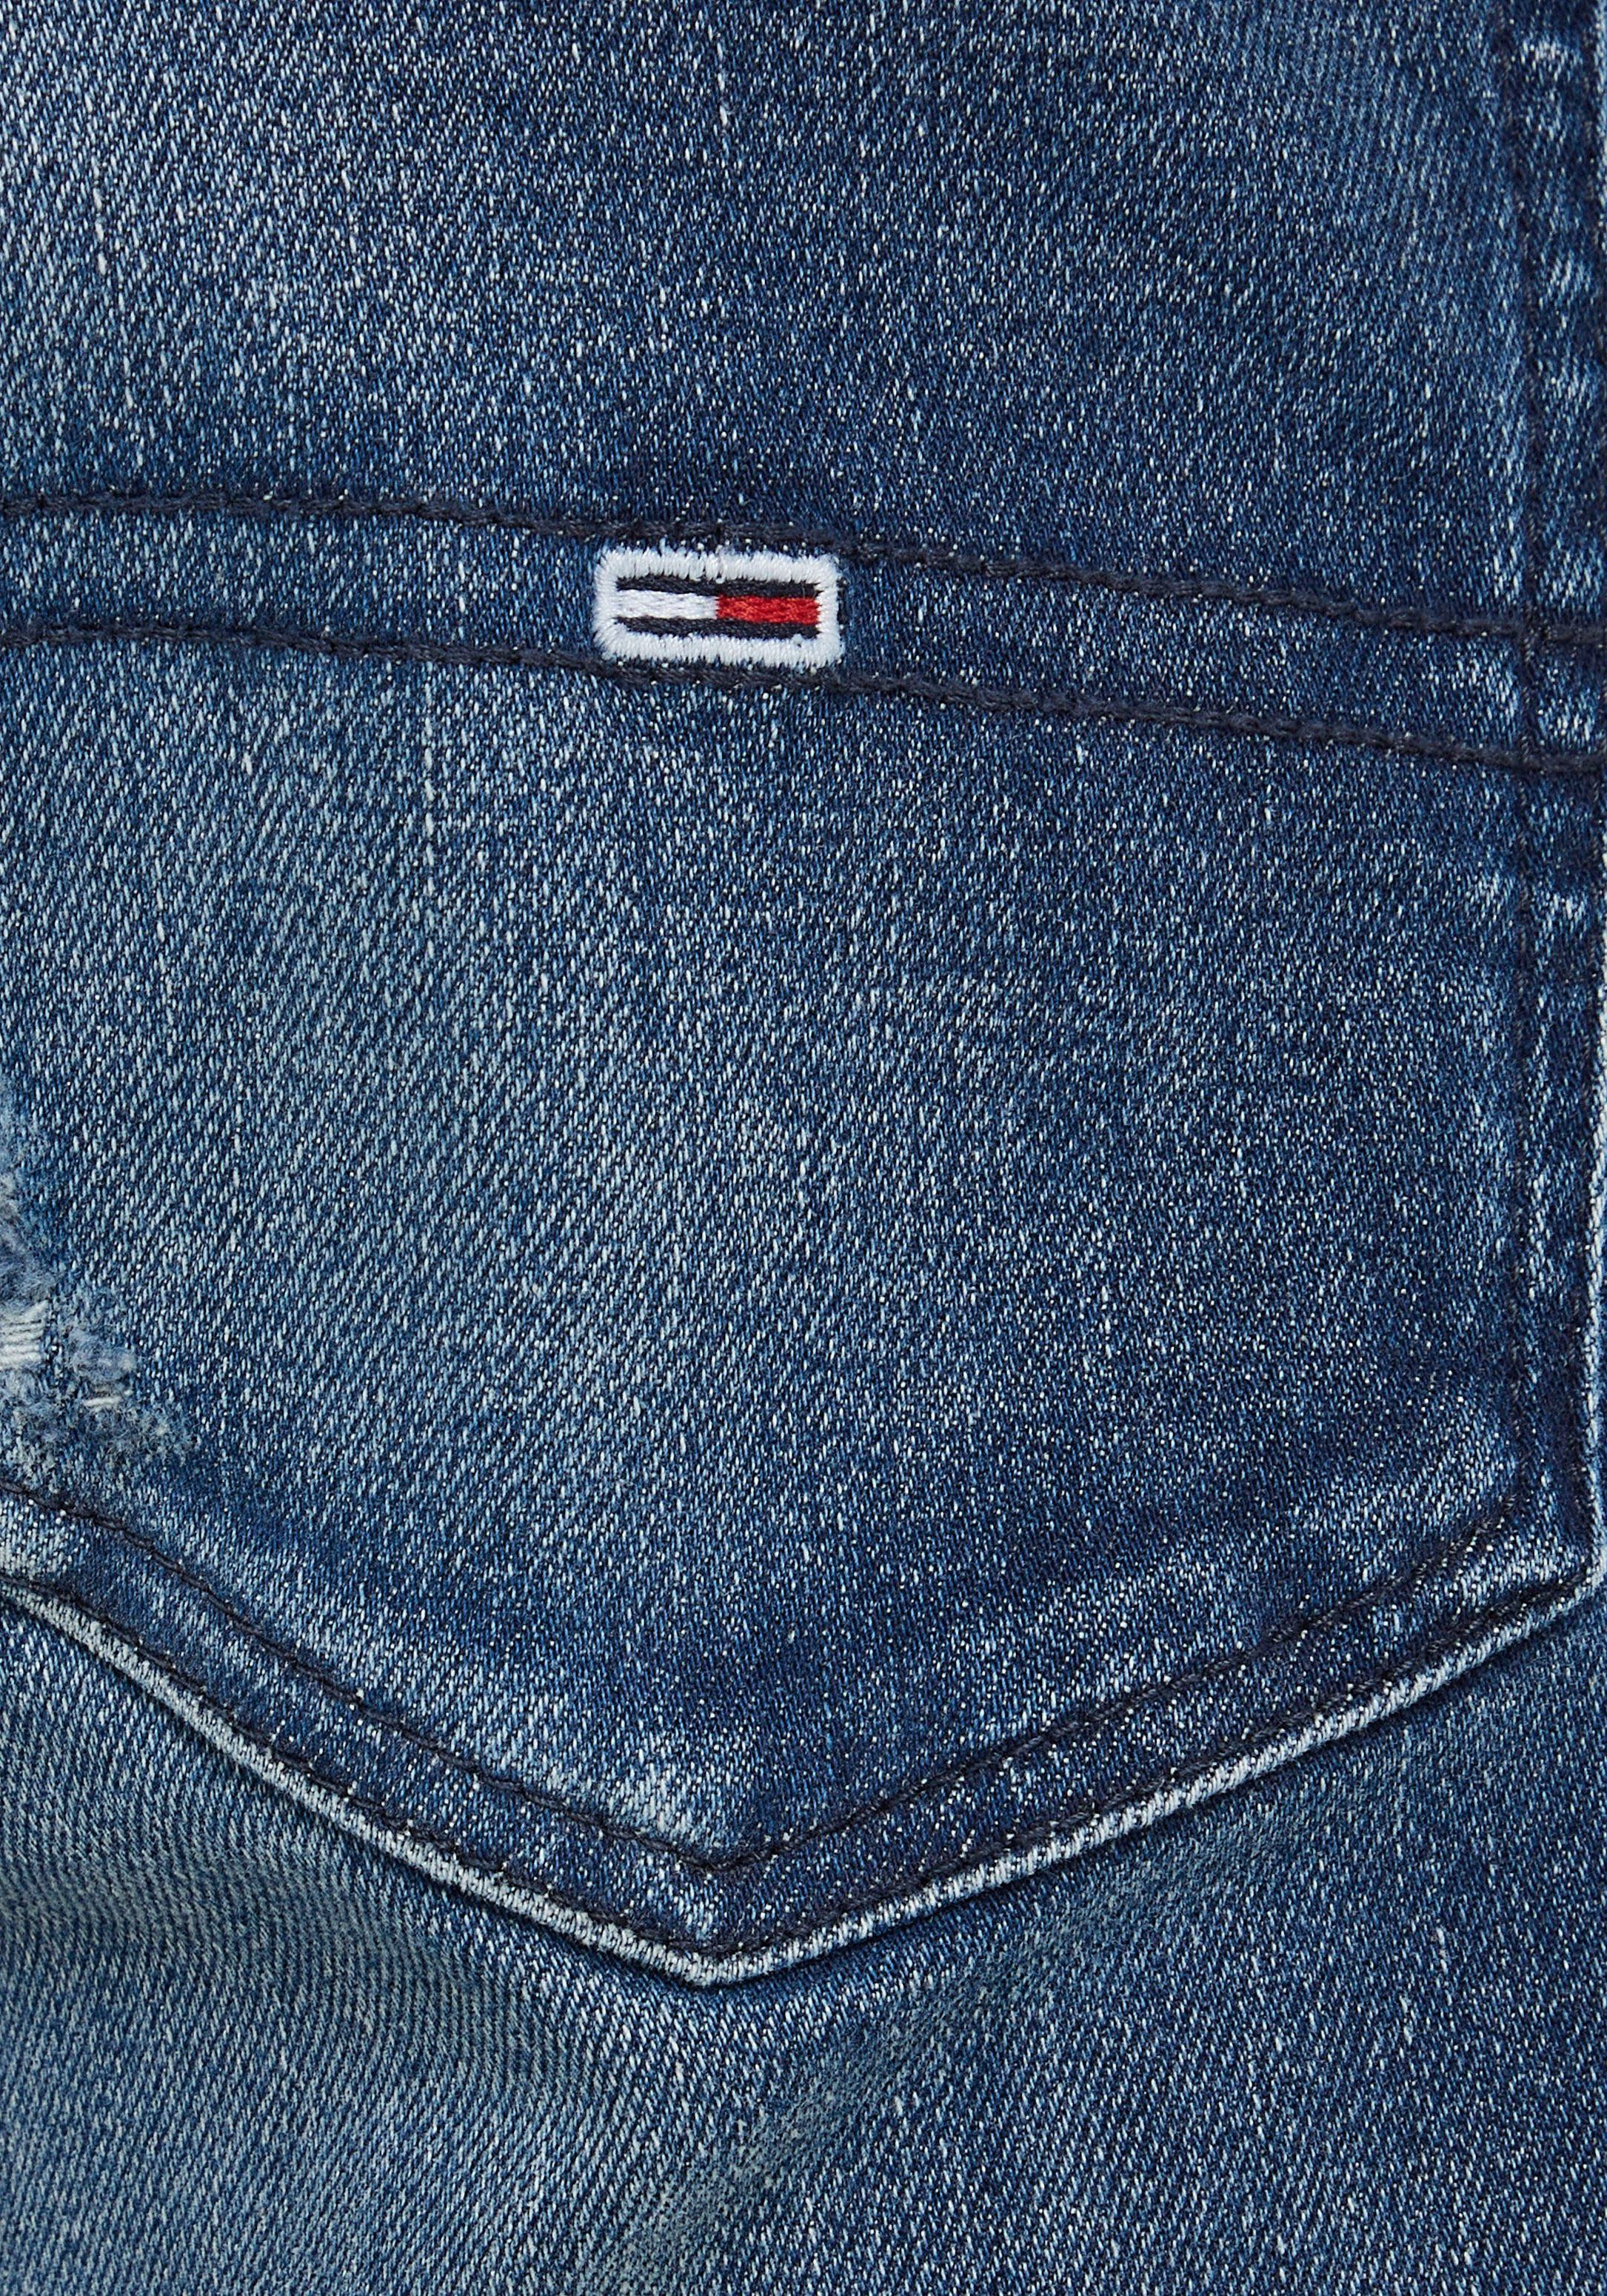 Tommy Dark Jeans Denim SLIM AUSTIN 5-Pocket-Jeans TPRD